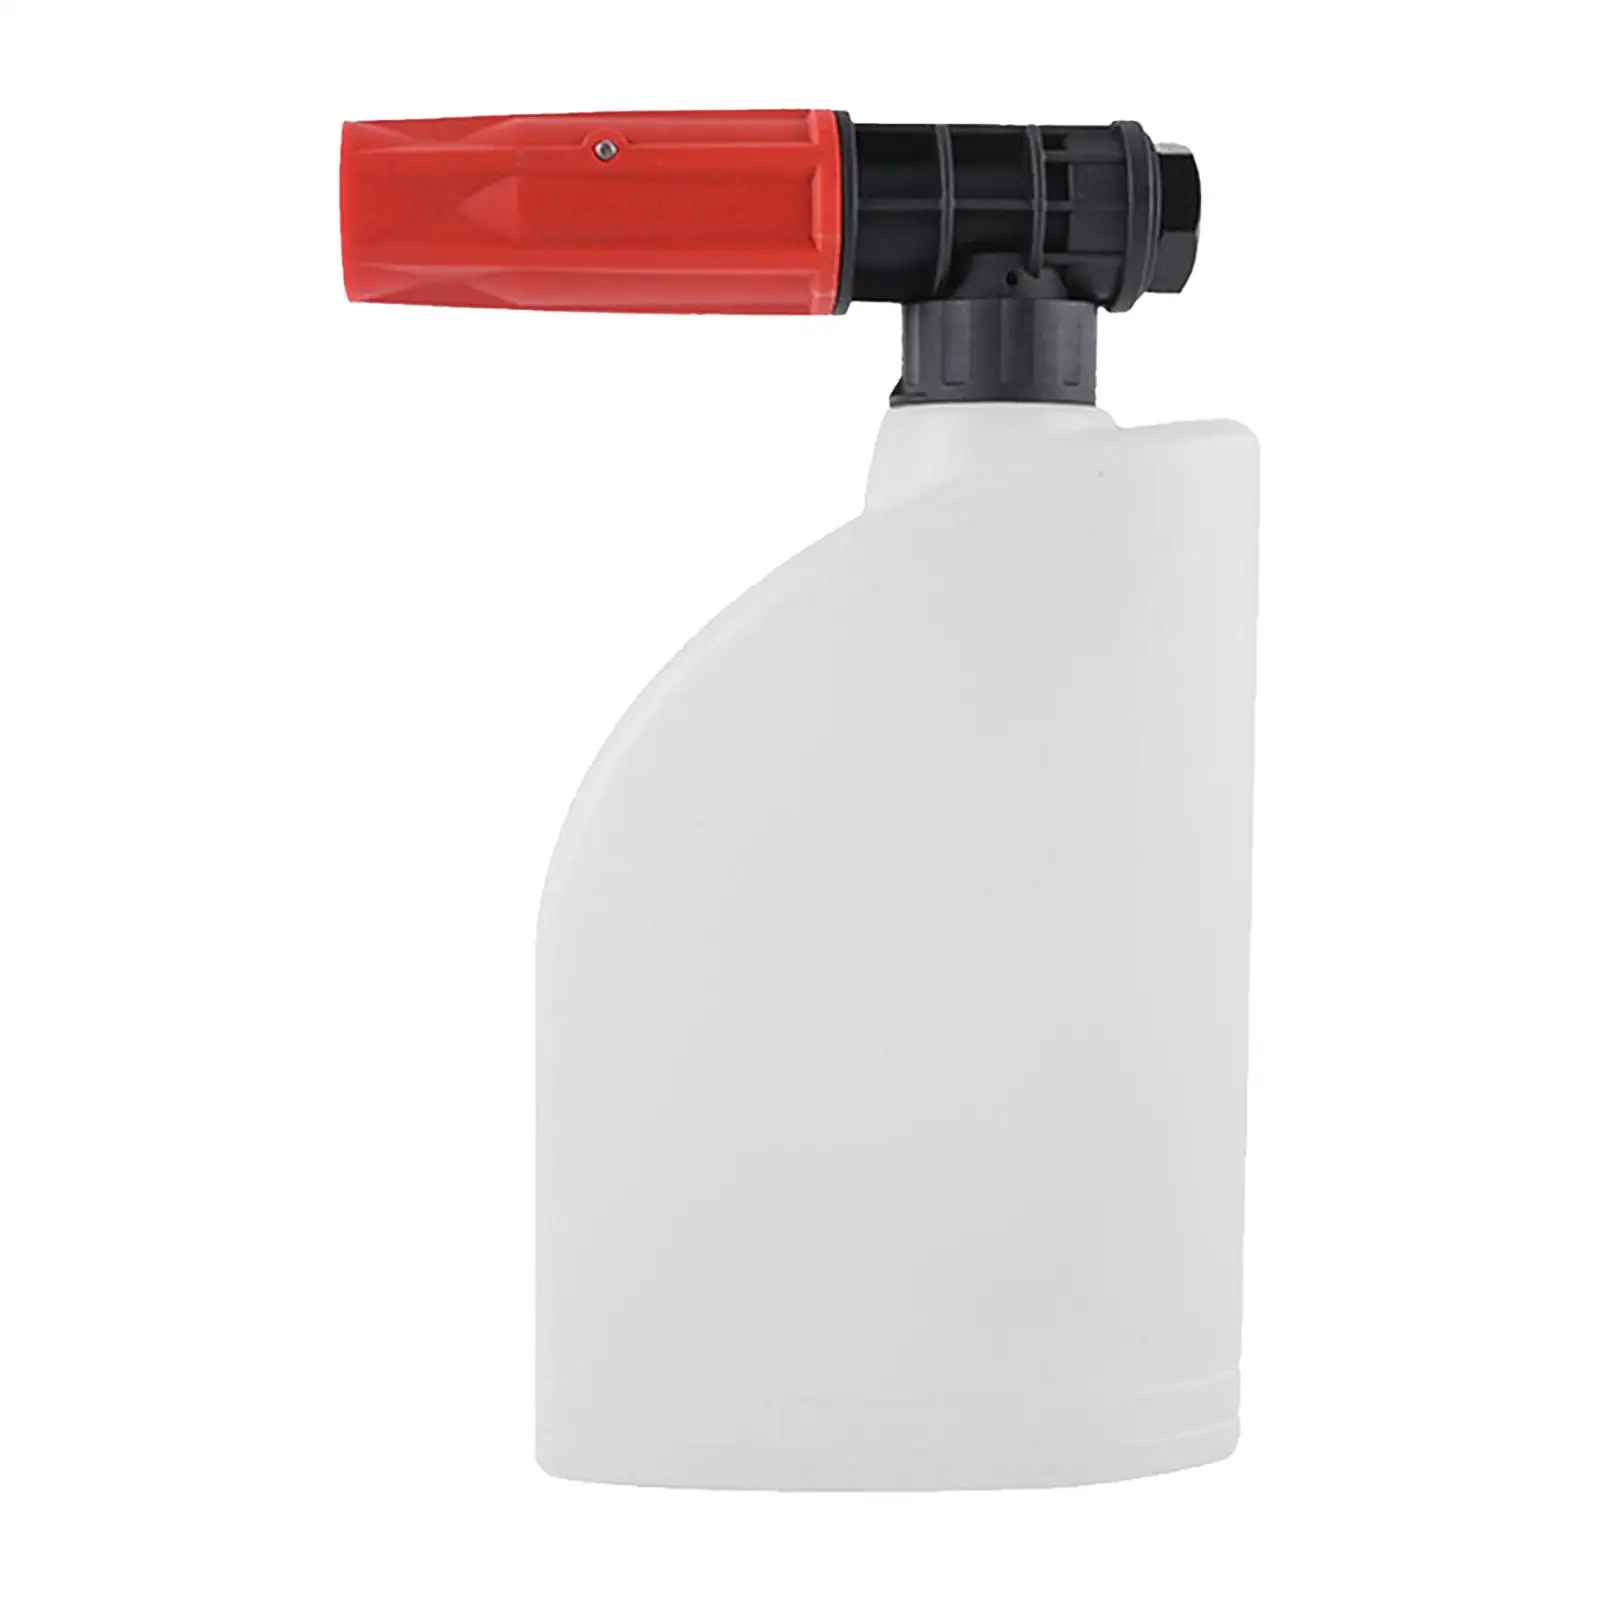 Car Foaming Sprayer 0.6L Adjustable Versatile Durable Foam Sprayer Manual for Automotive Detailing Car Washing House Cleaning